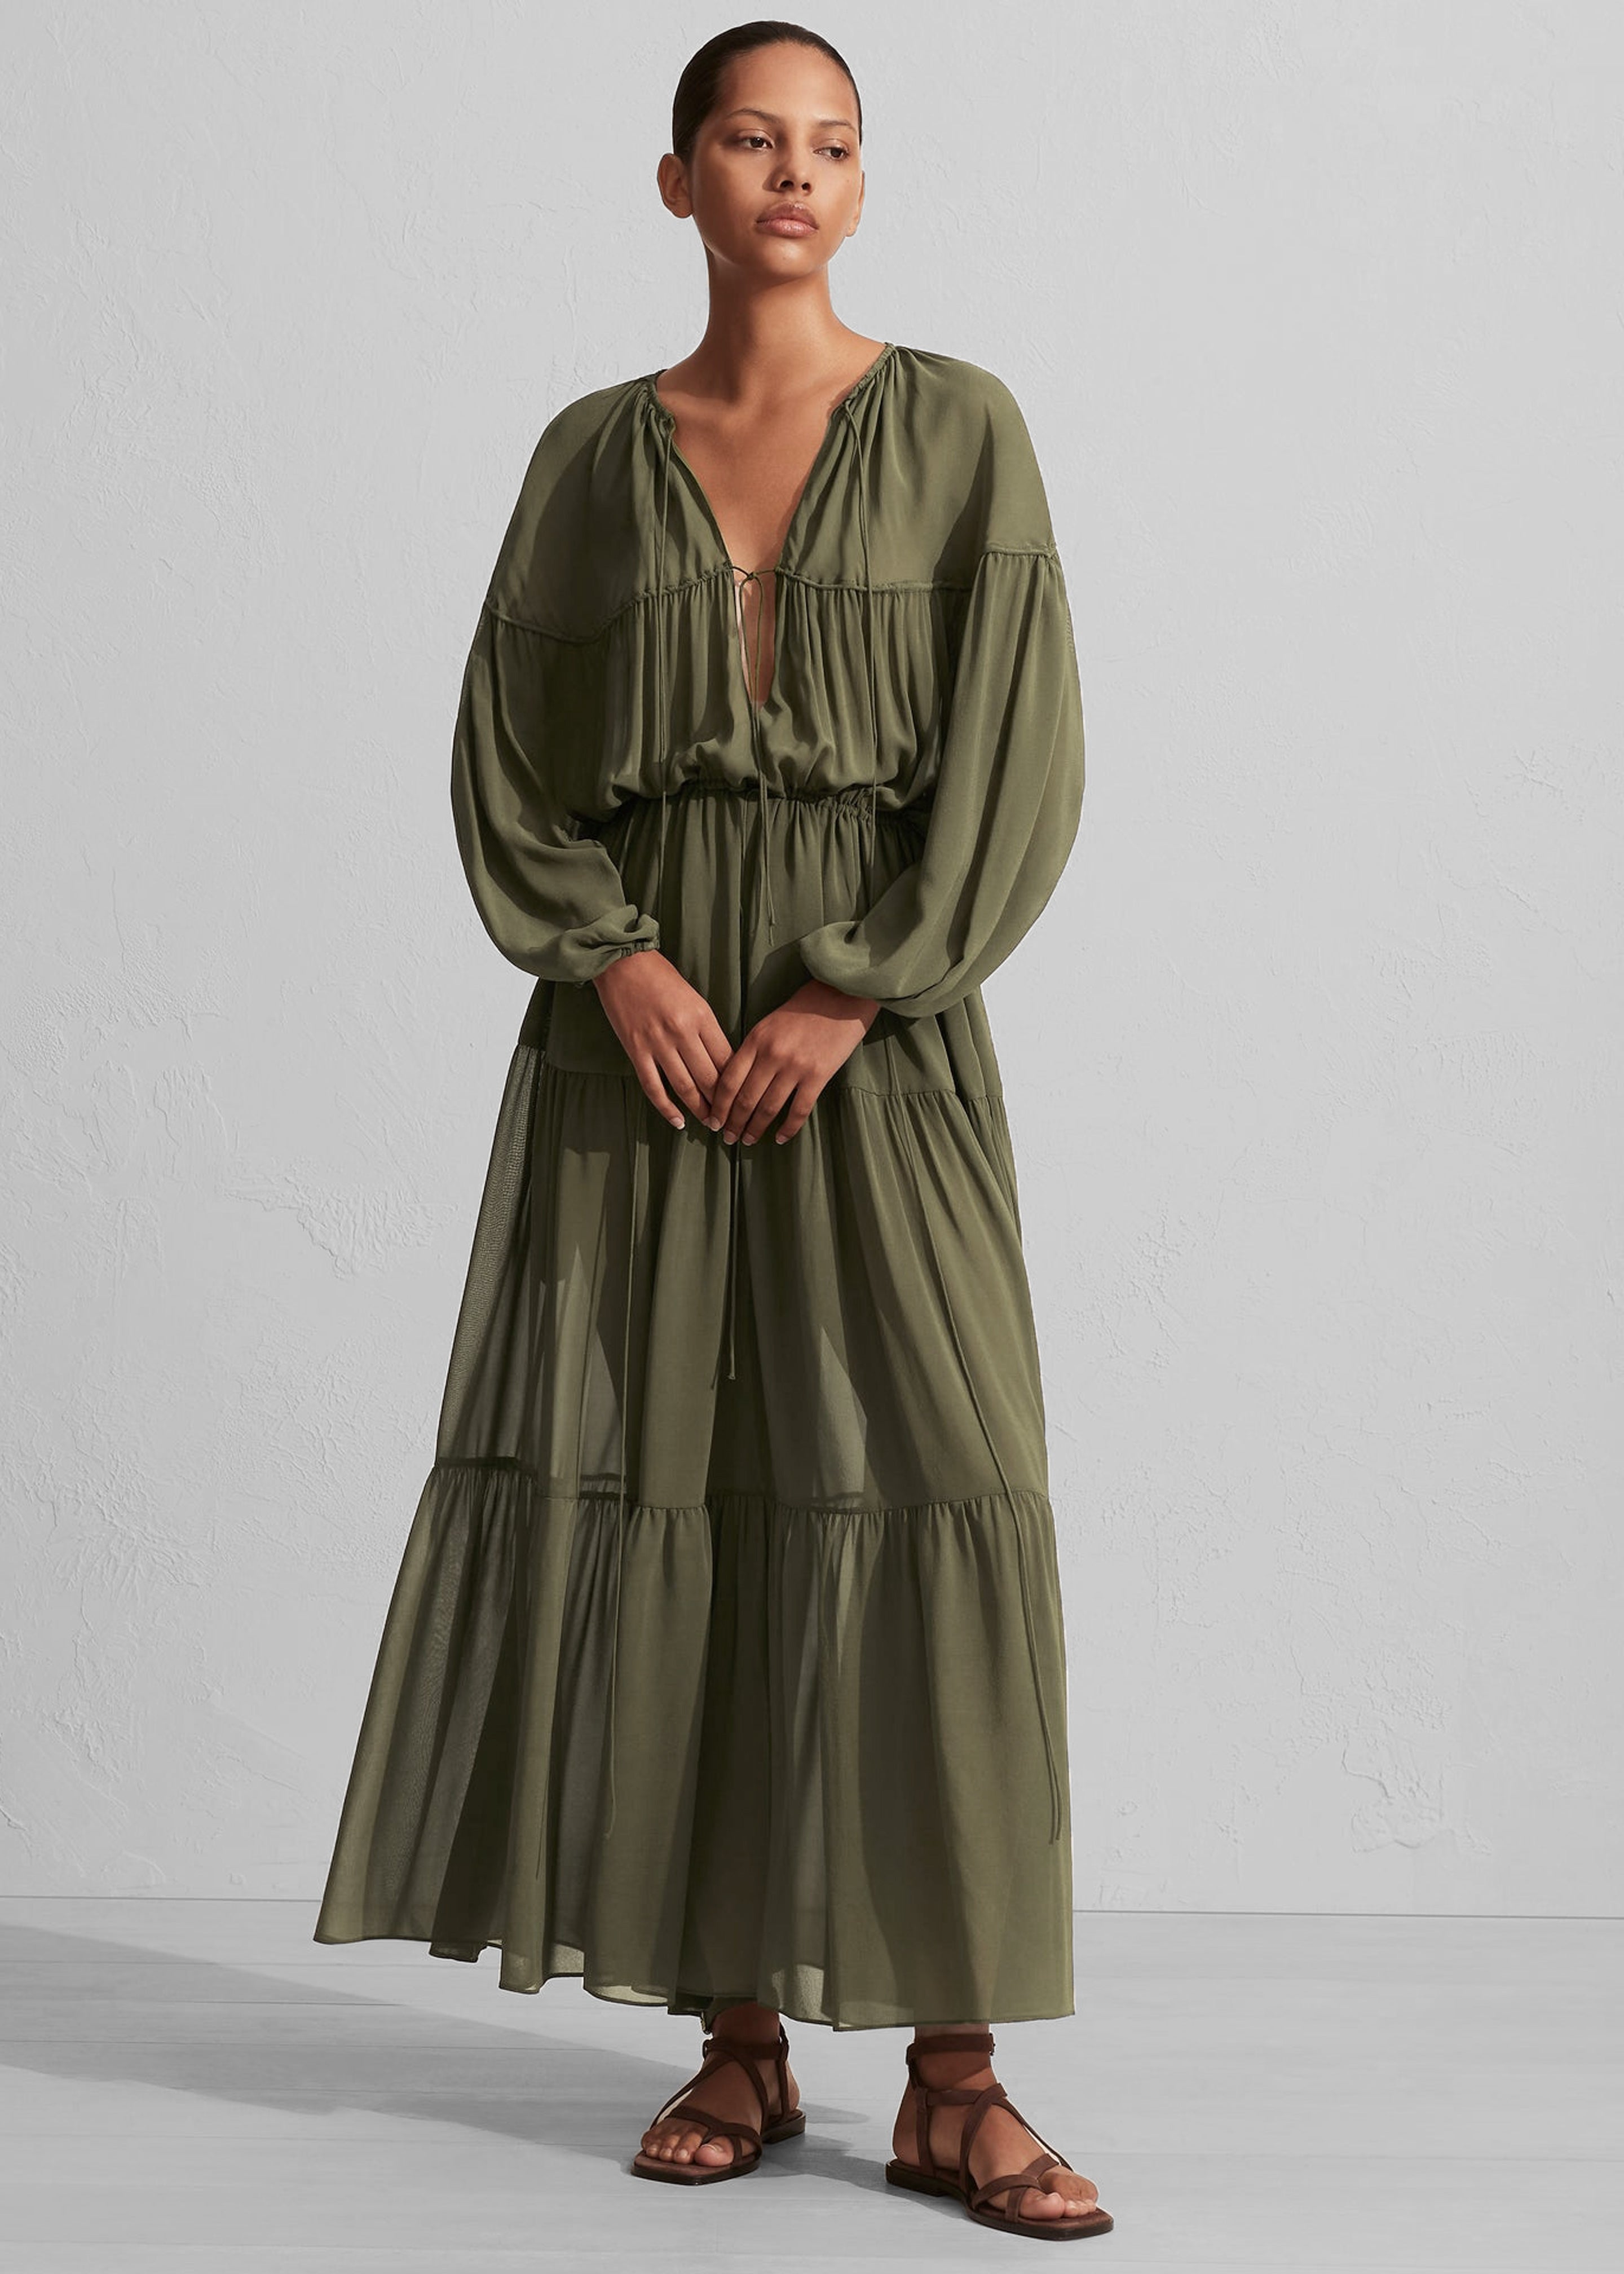 Matteau Voluminous Tiered Tie Dress - Cypress - 6